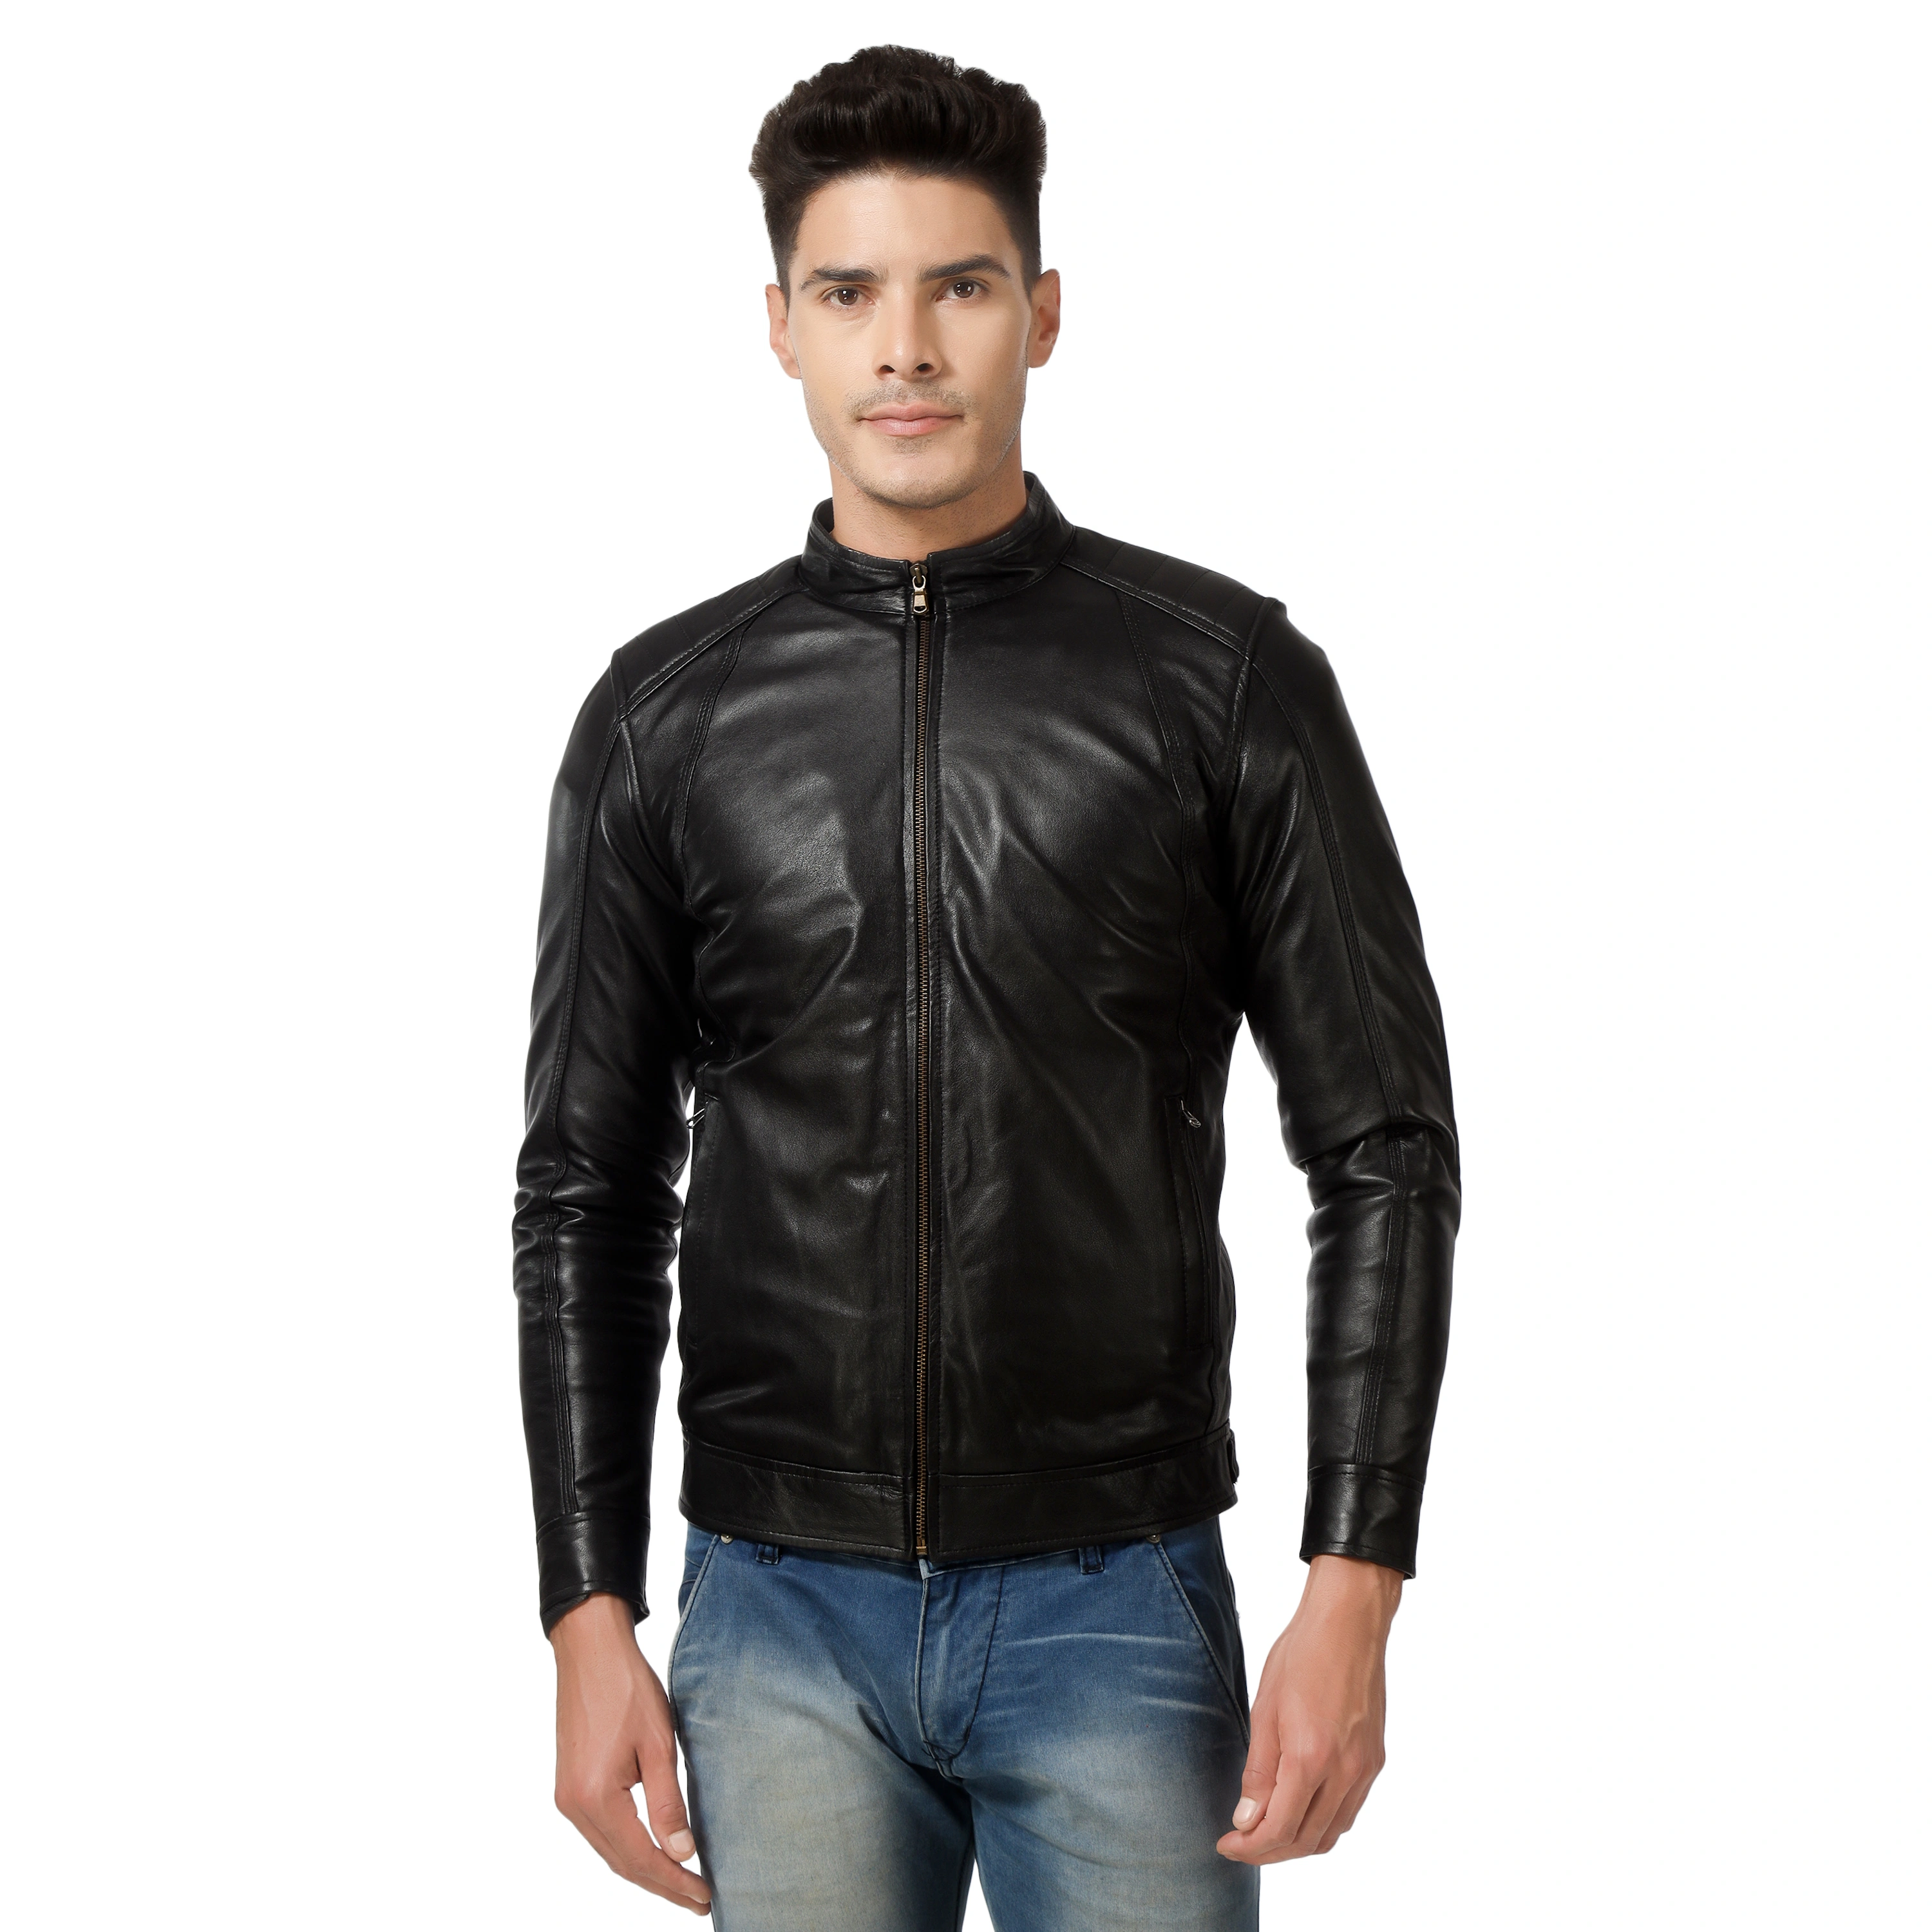 CHARMSHILP - Men's Genuine Premium Leather Jacket for Men And Boys..-11549192